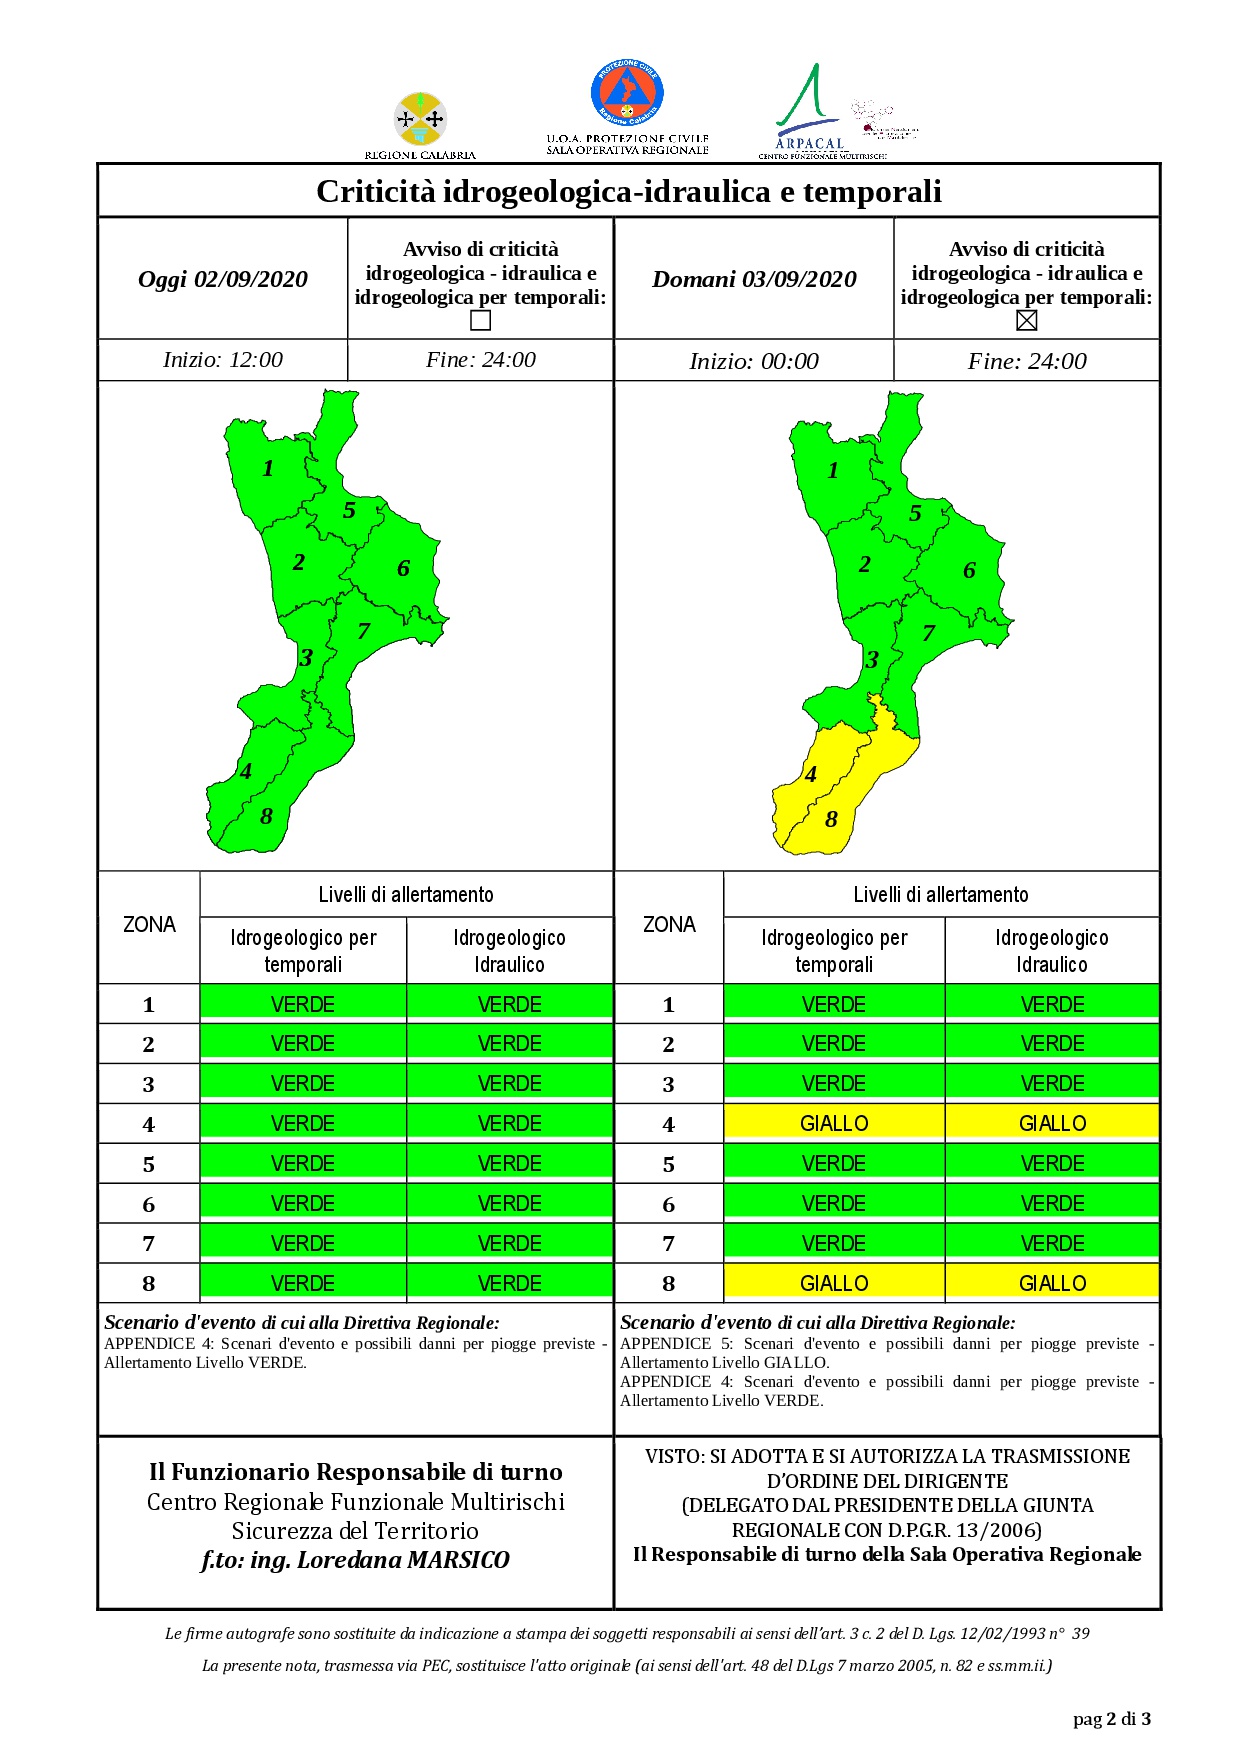 Criticità idrogeologica-idraulica e temporali in Calabria 02-09-2020